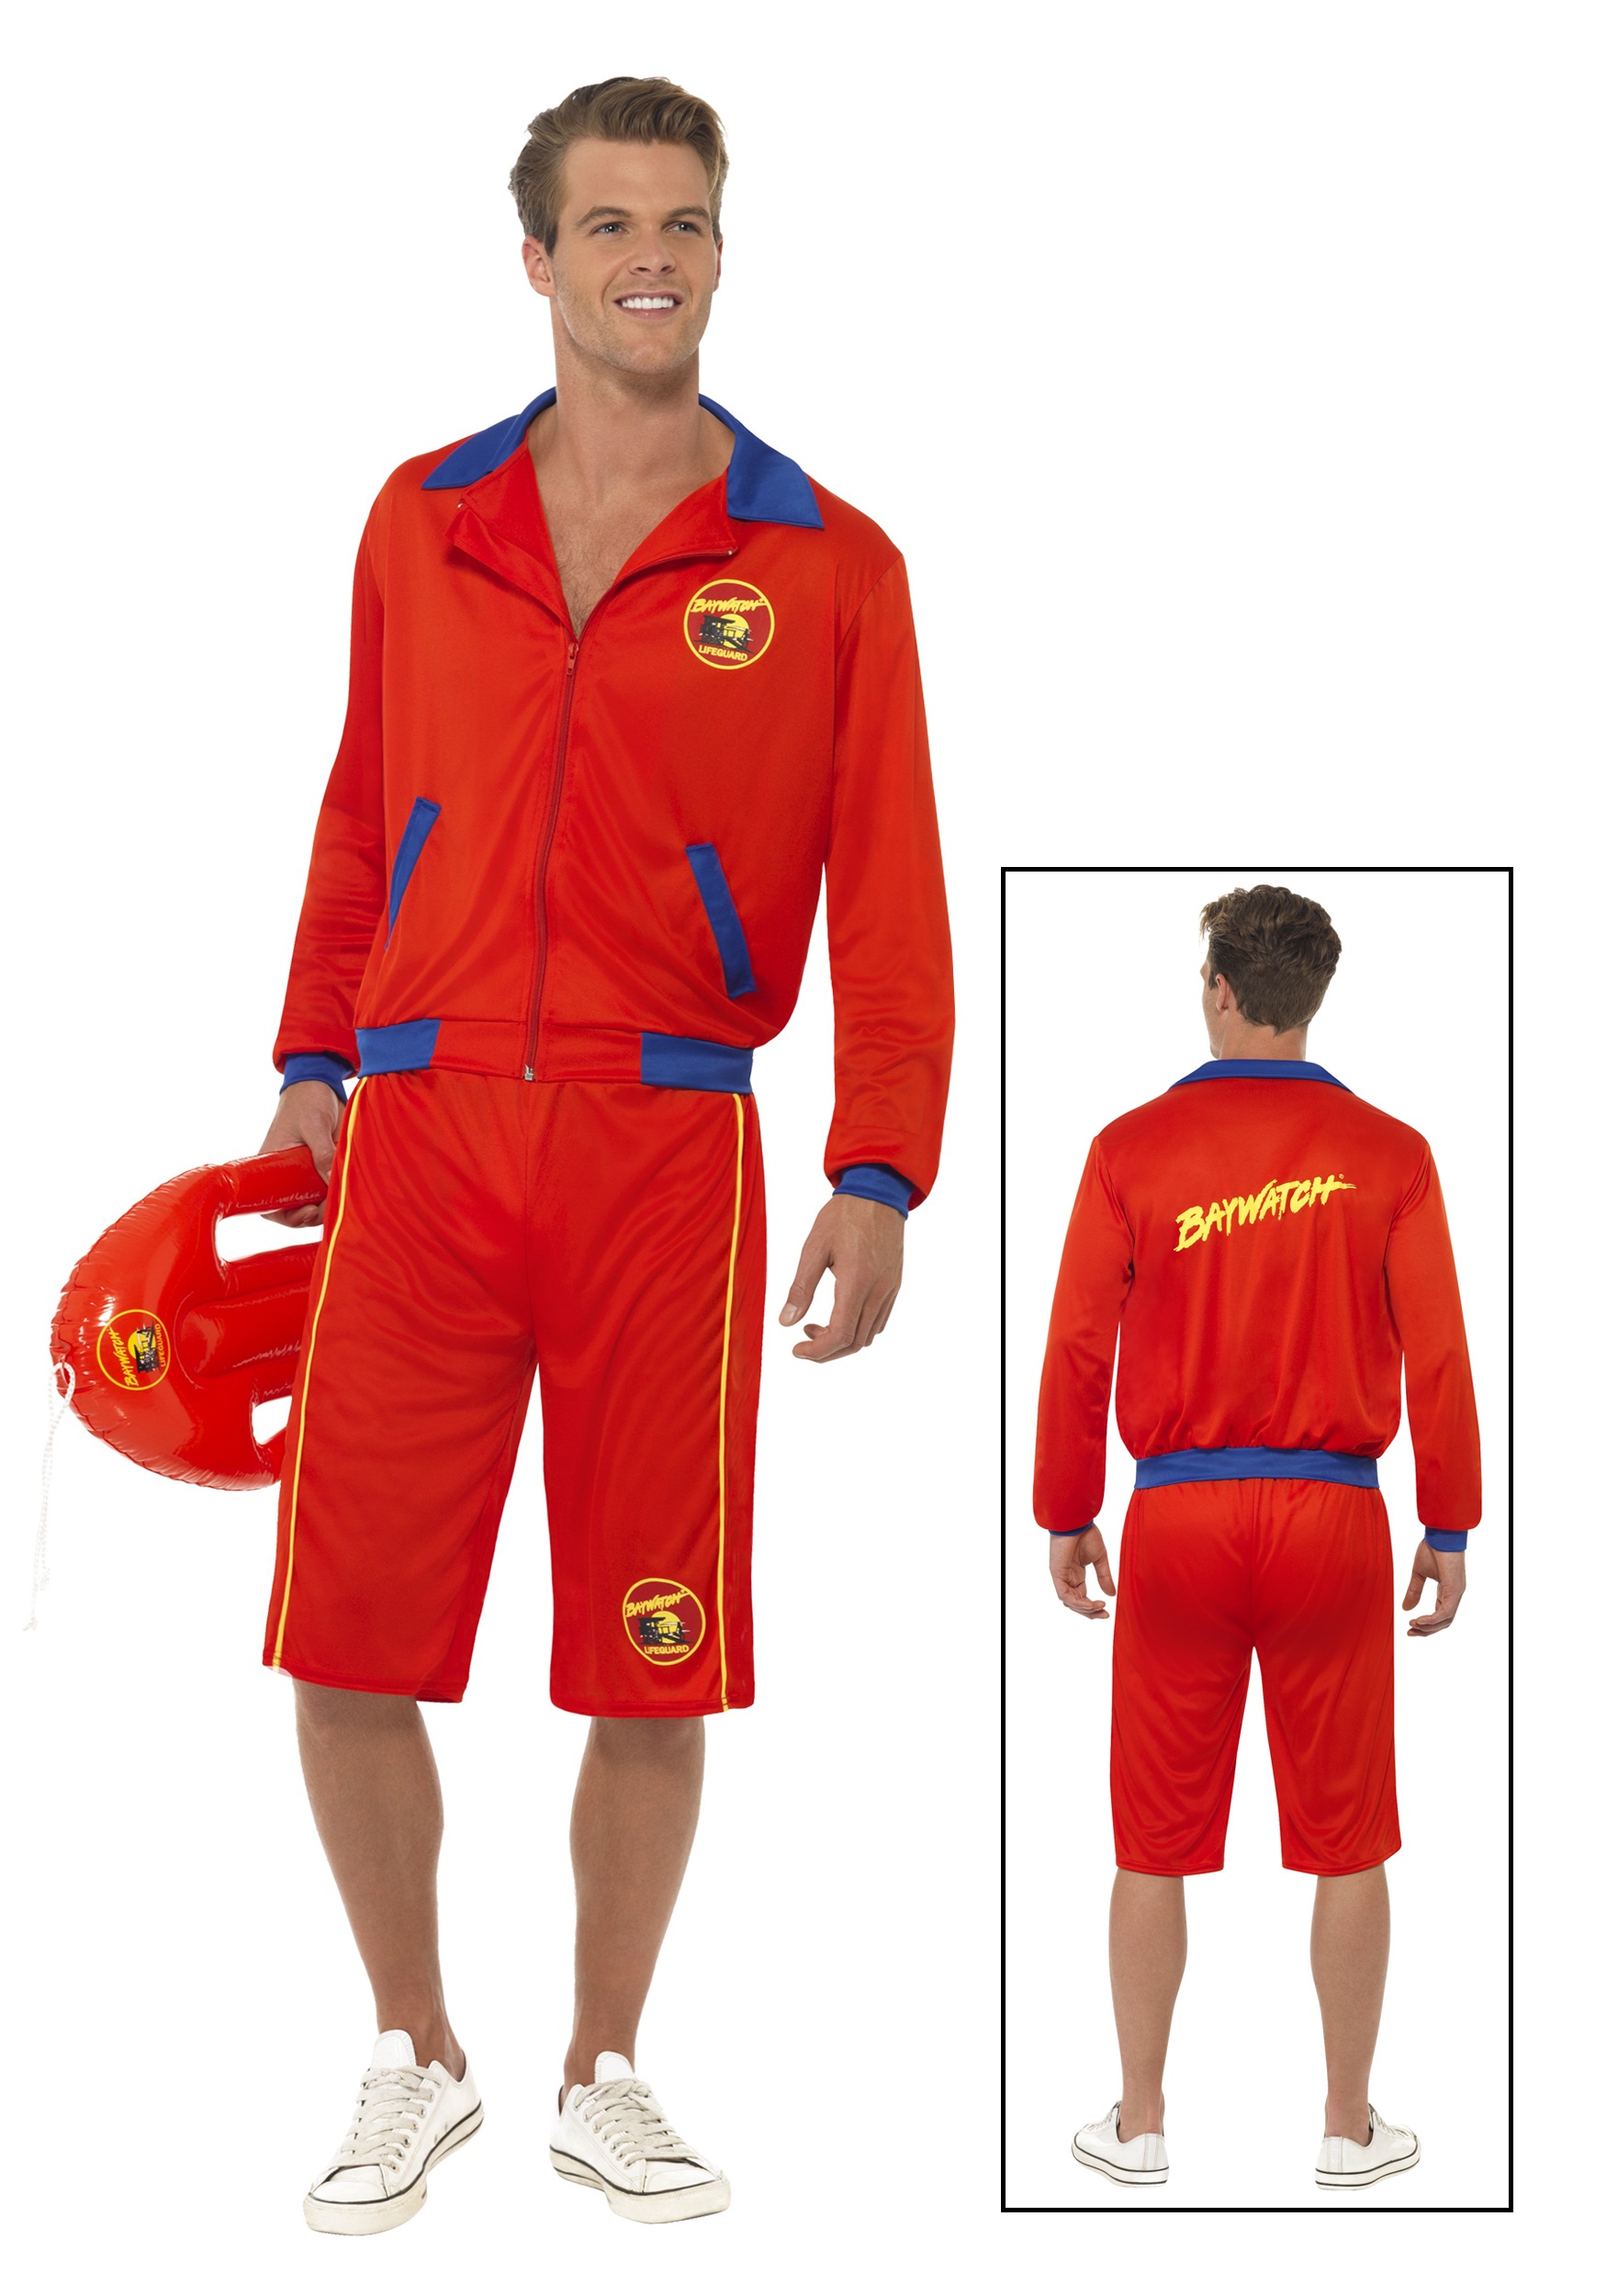 Men's Baywatch Beach Lifeguard Costume